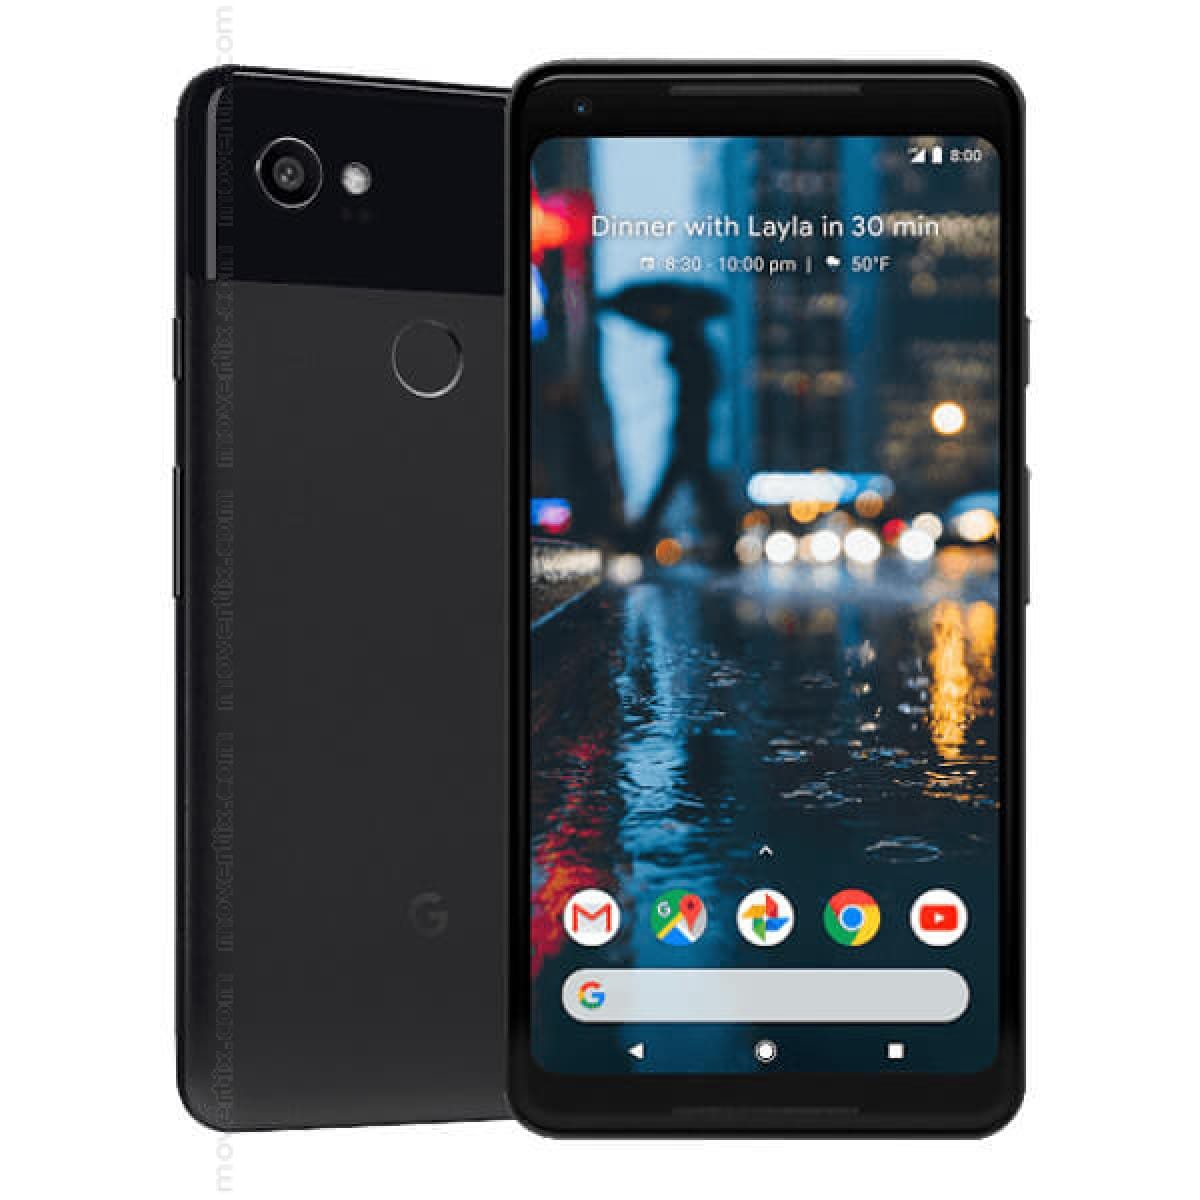 Google Pixel 2 XL - 64 GB - Just Black - Unlocked - GSM - UK Imp